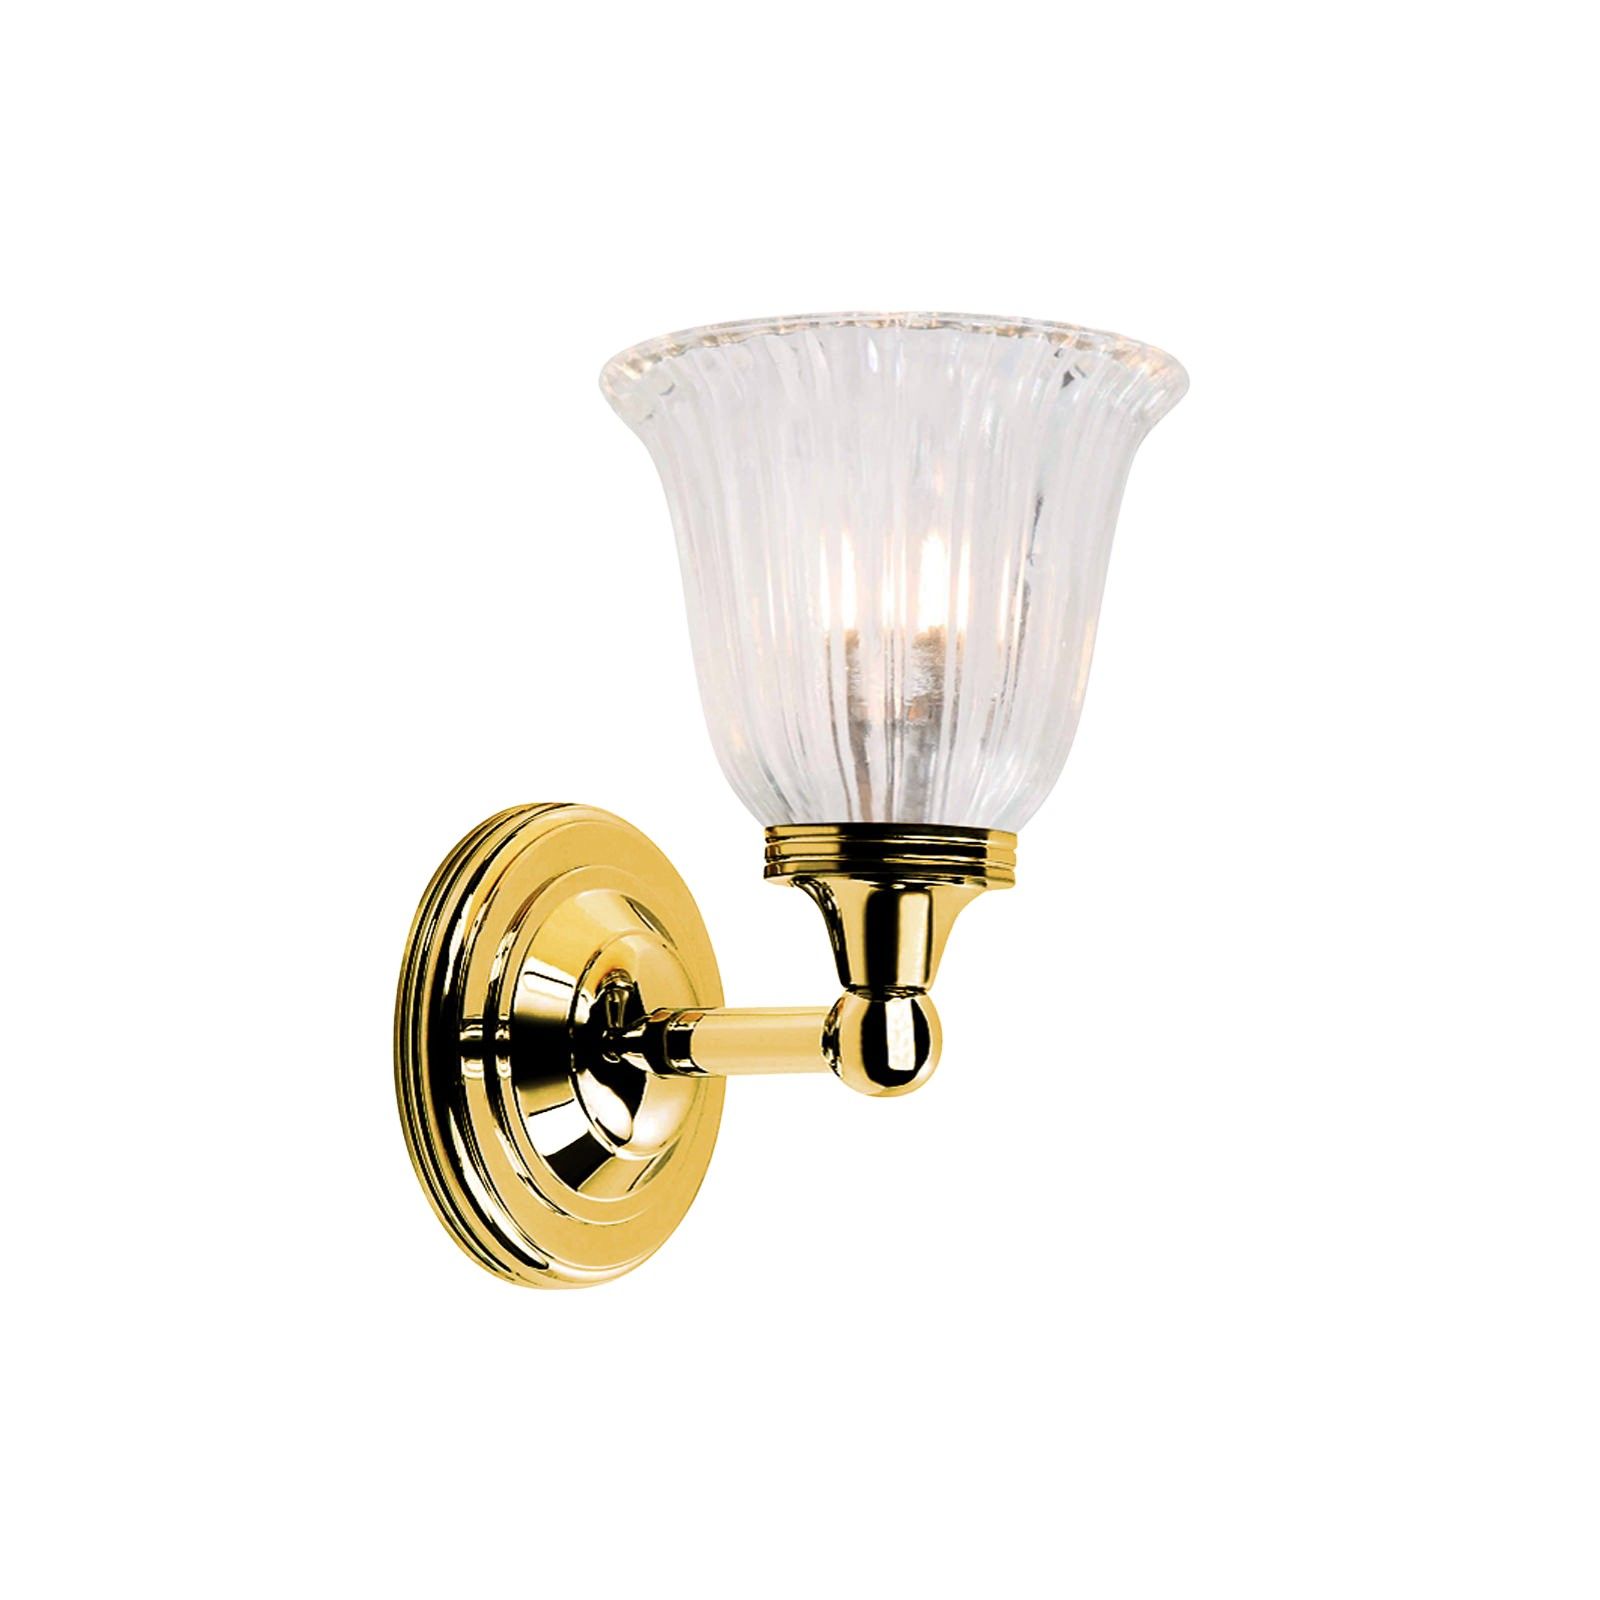 Bathroom wall light - Austin 1 in polished brass